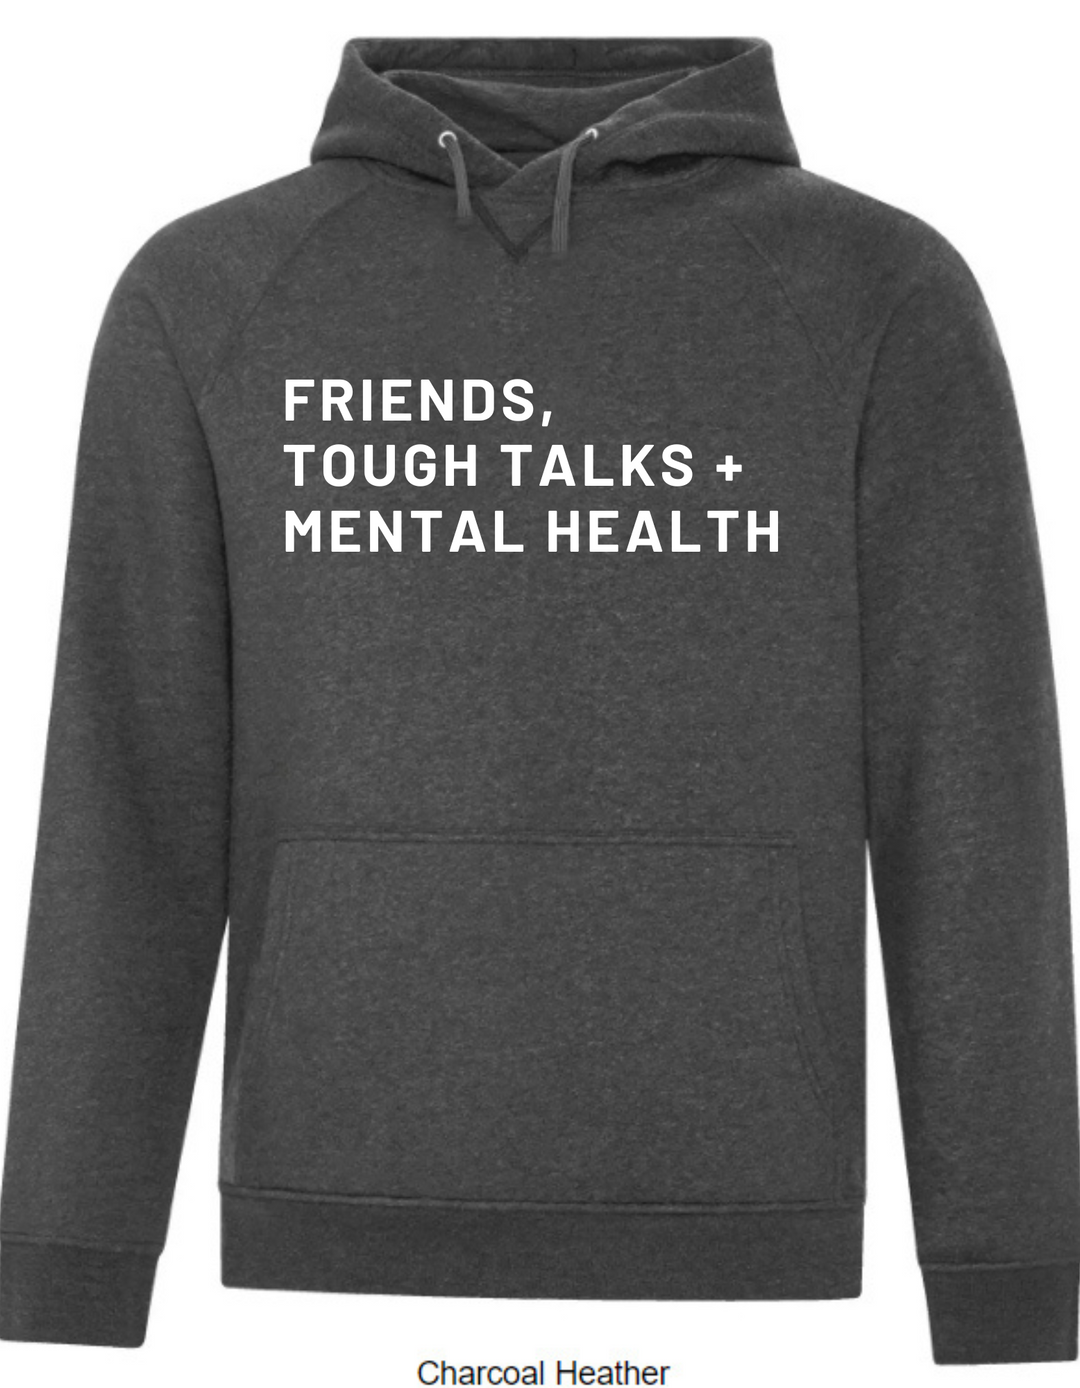 Adult Heavy Blend Hooded Sweatshirt  - FRIENDS, TOUGH TALKS + MENTAL HEALTH - Charcoal